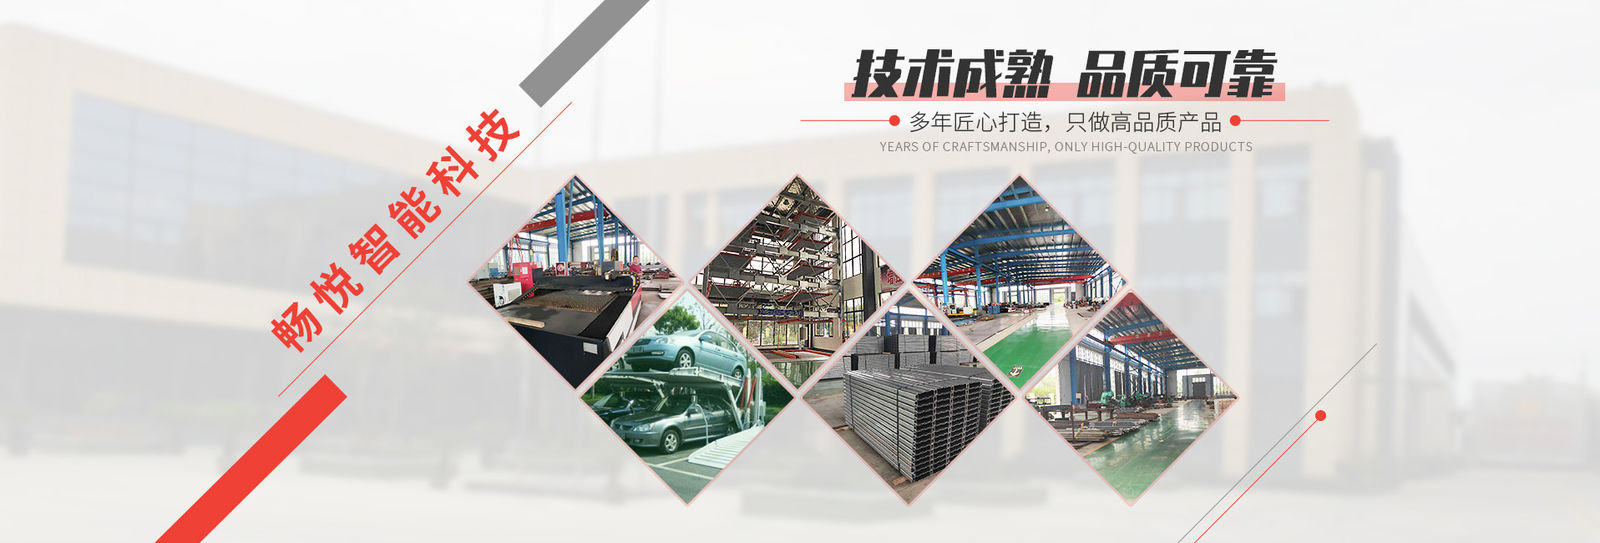 Chiny Shanghai Changyue Automation Machinery Co., Ltd. profil firmy